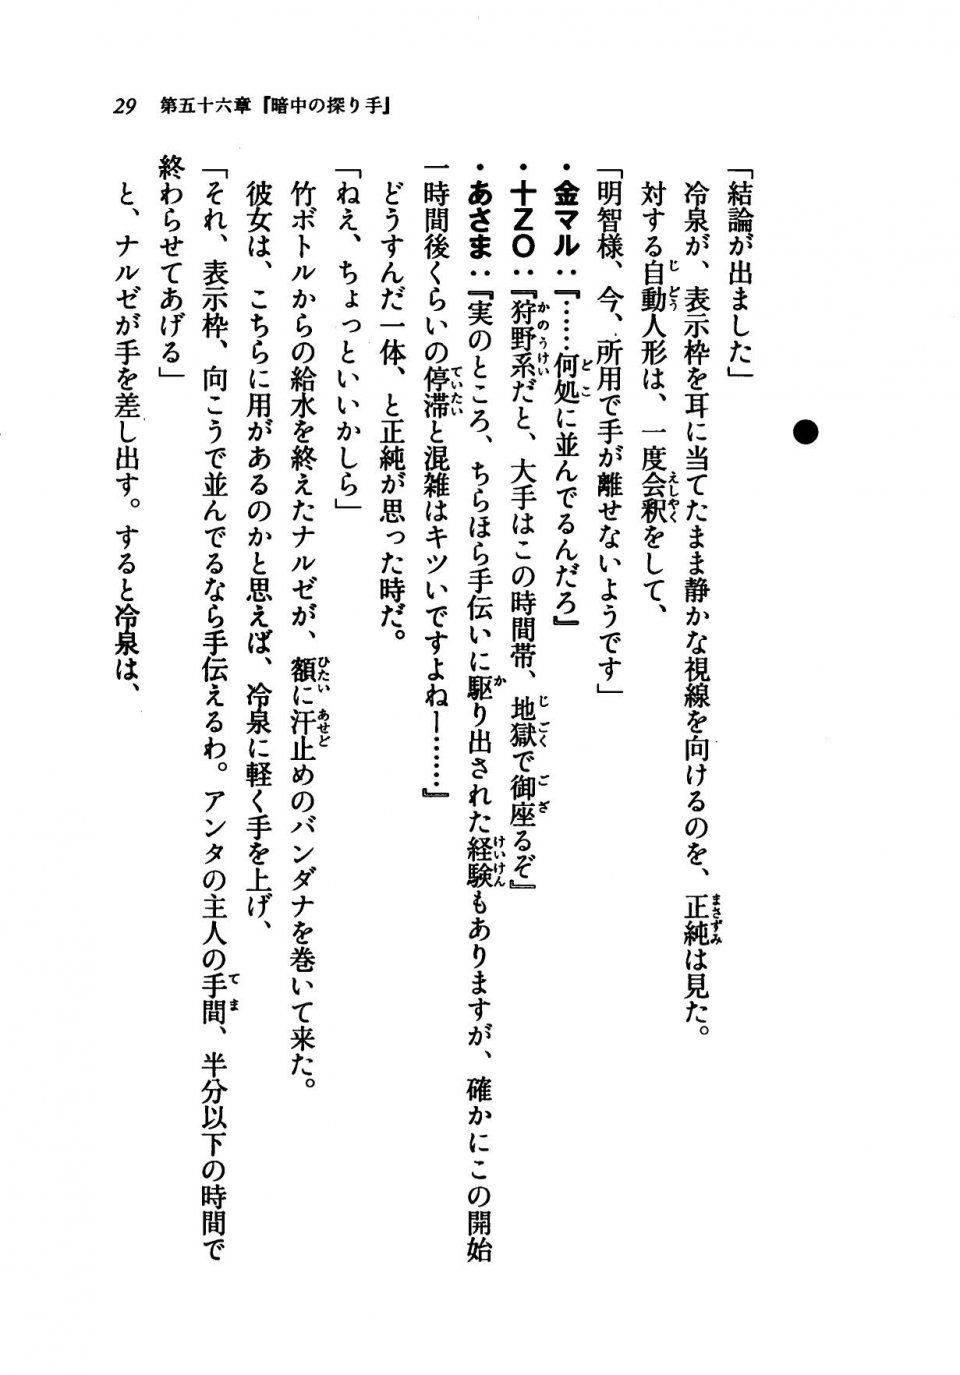 Kyoukai Senjou no Horizon LN Vol 21(8C) Part 1 - Photo #28